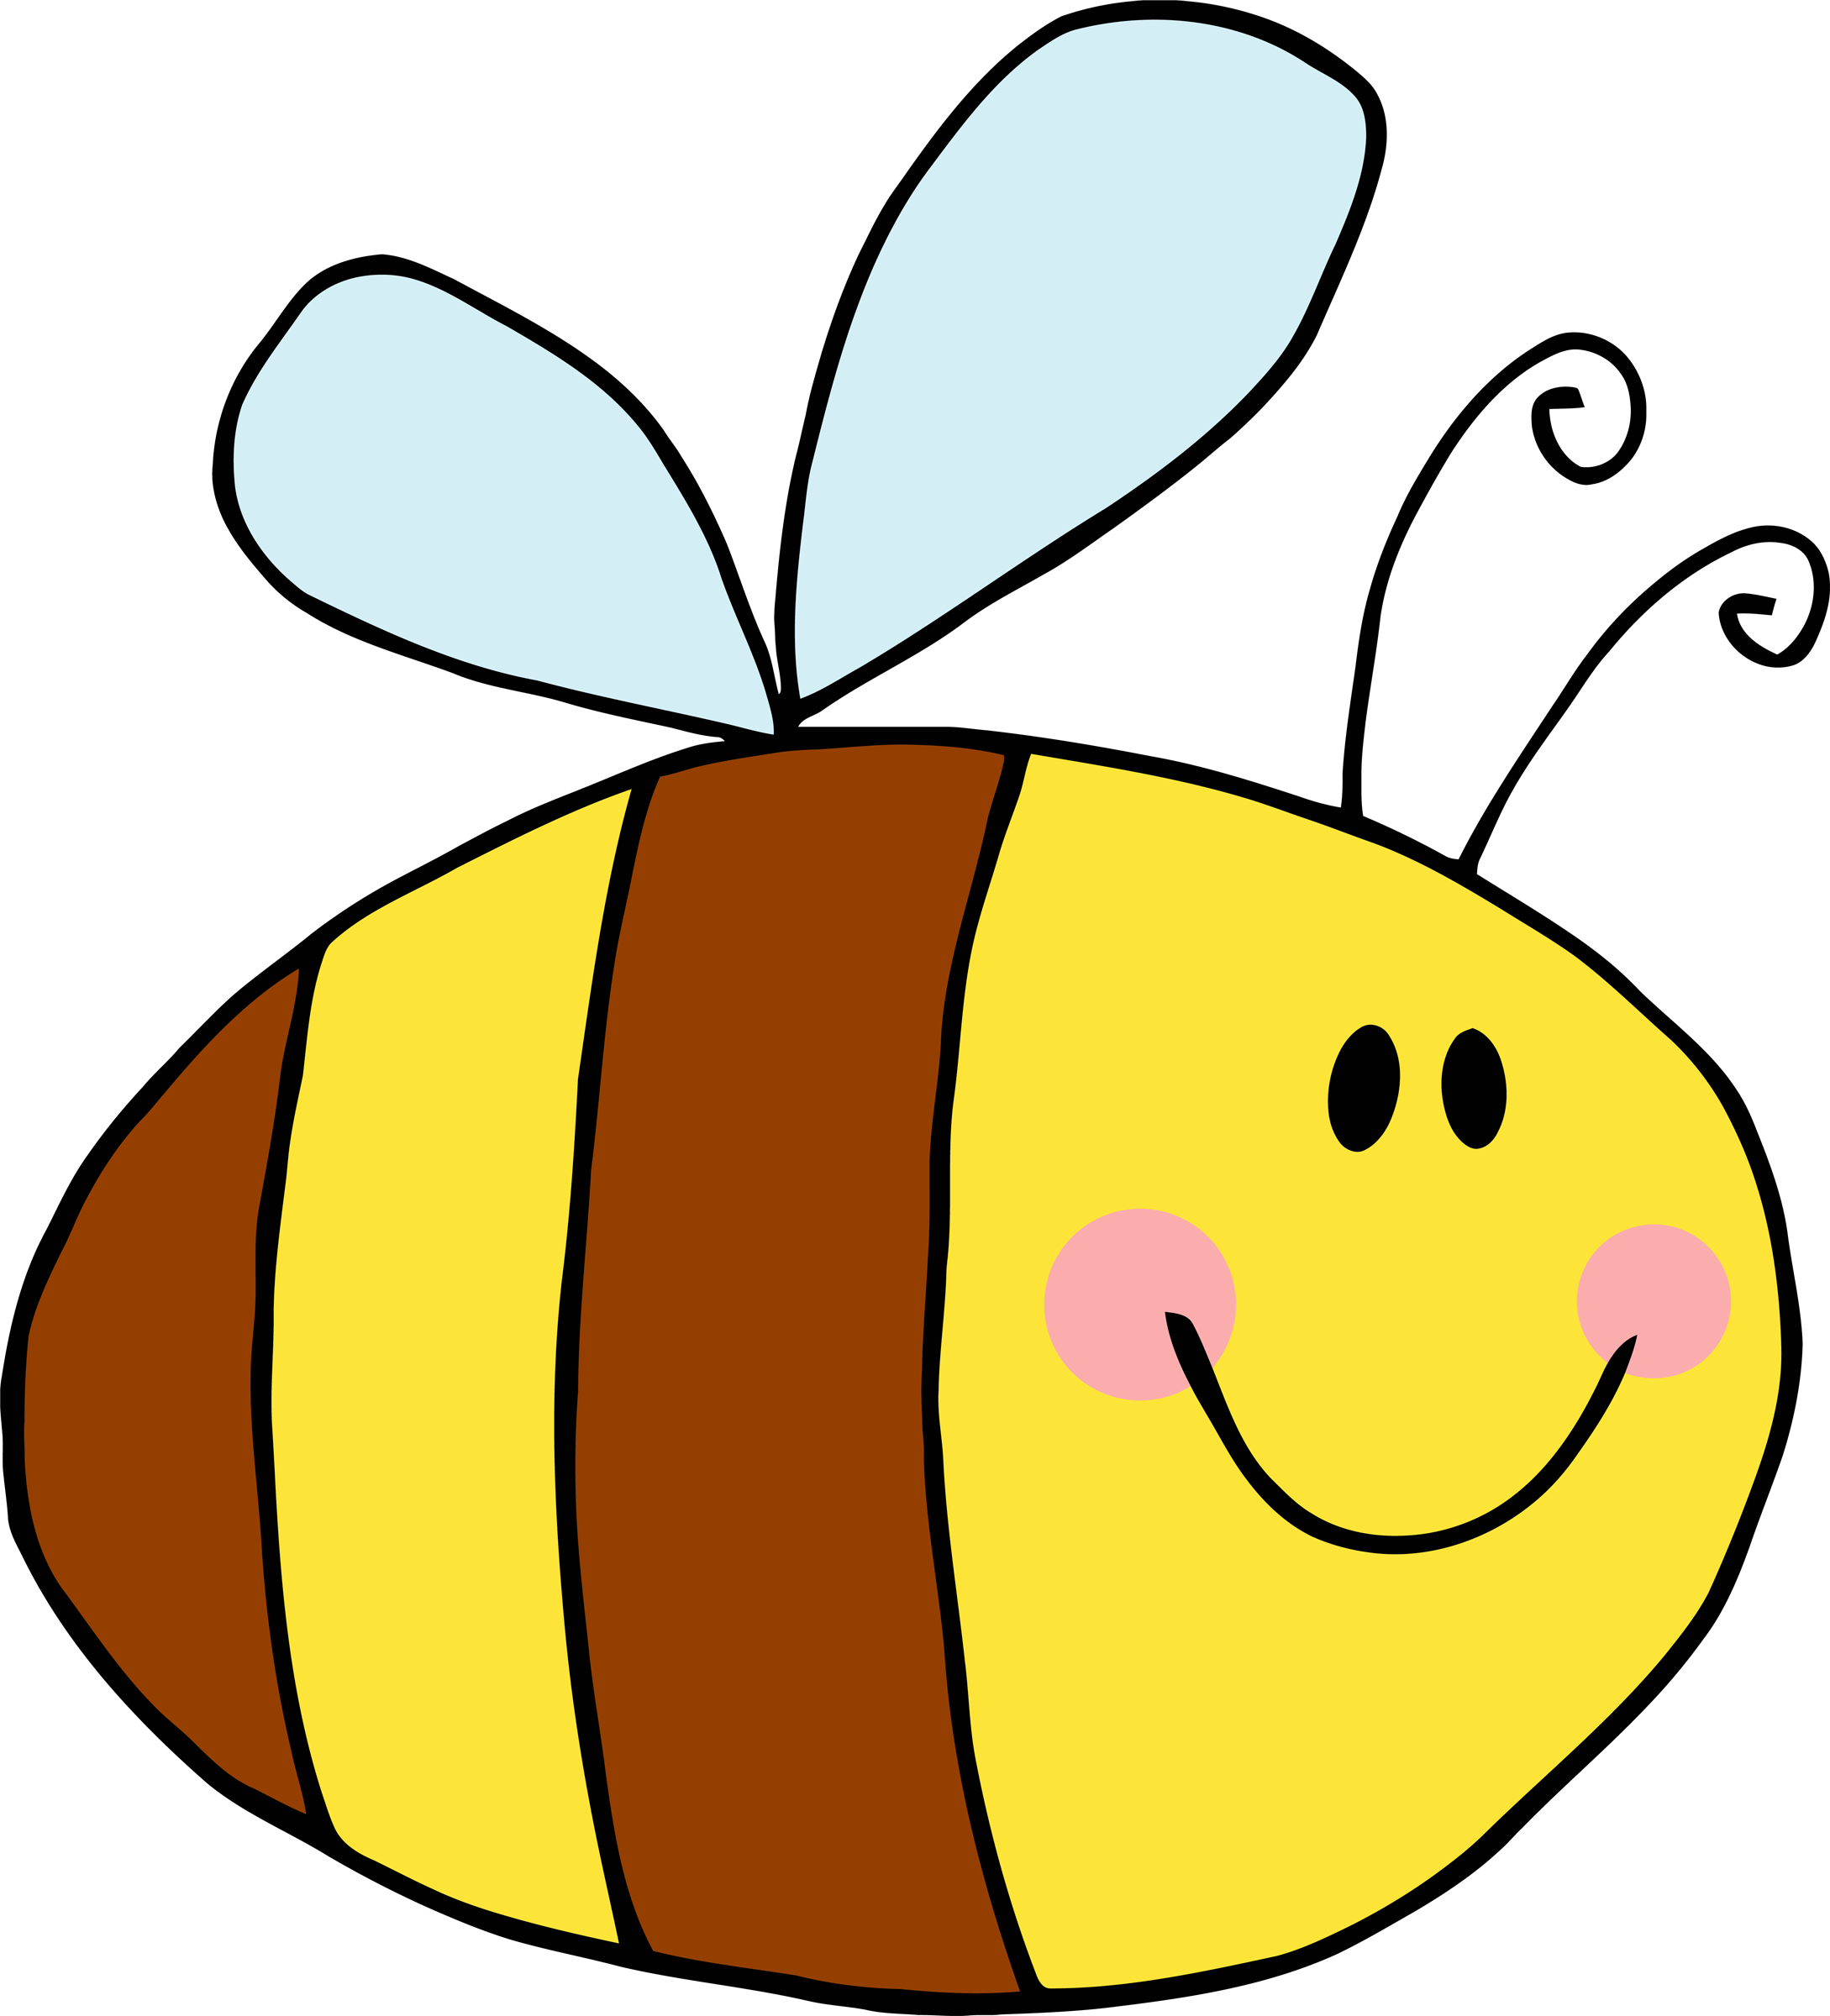 pic of a cartoon bee